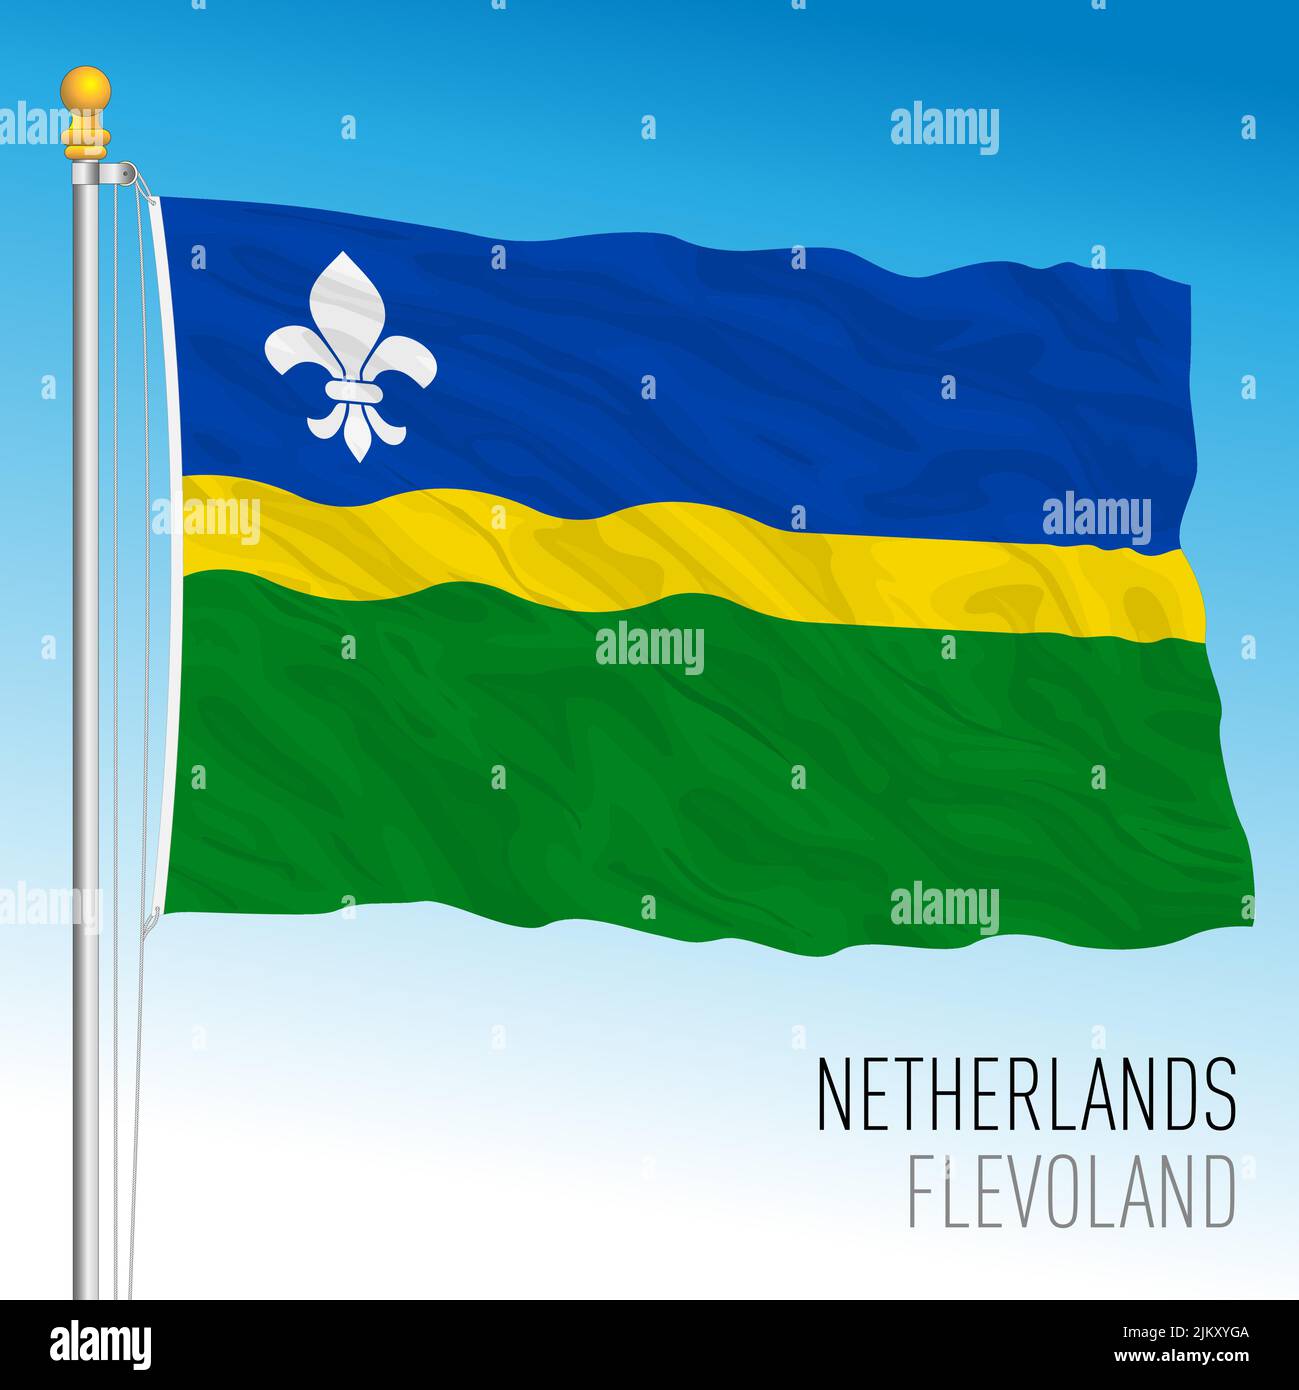 Flevoland provincial flag, Netherlands, European Union, vector illustration Stock Vector